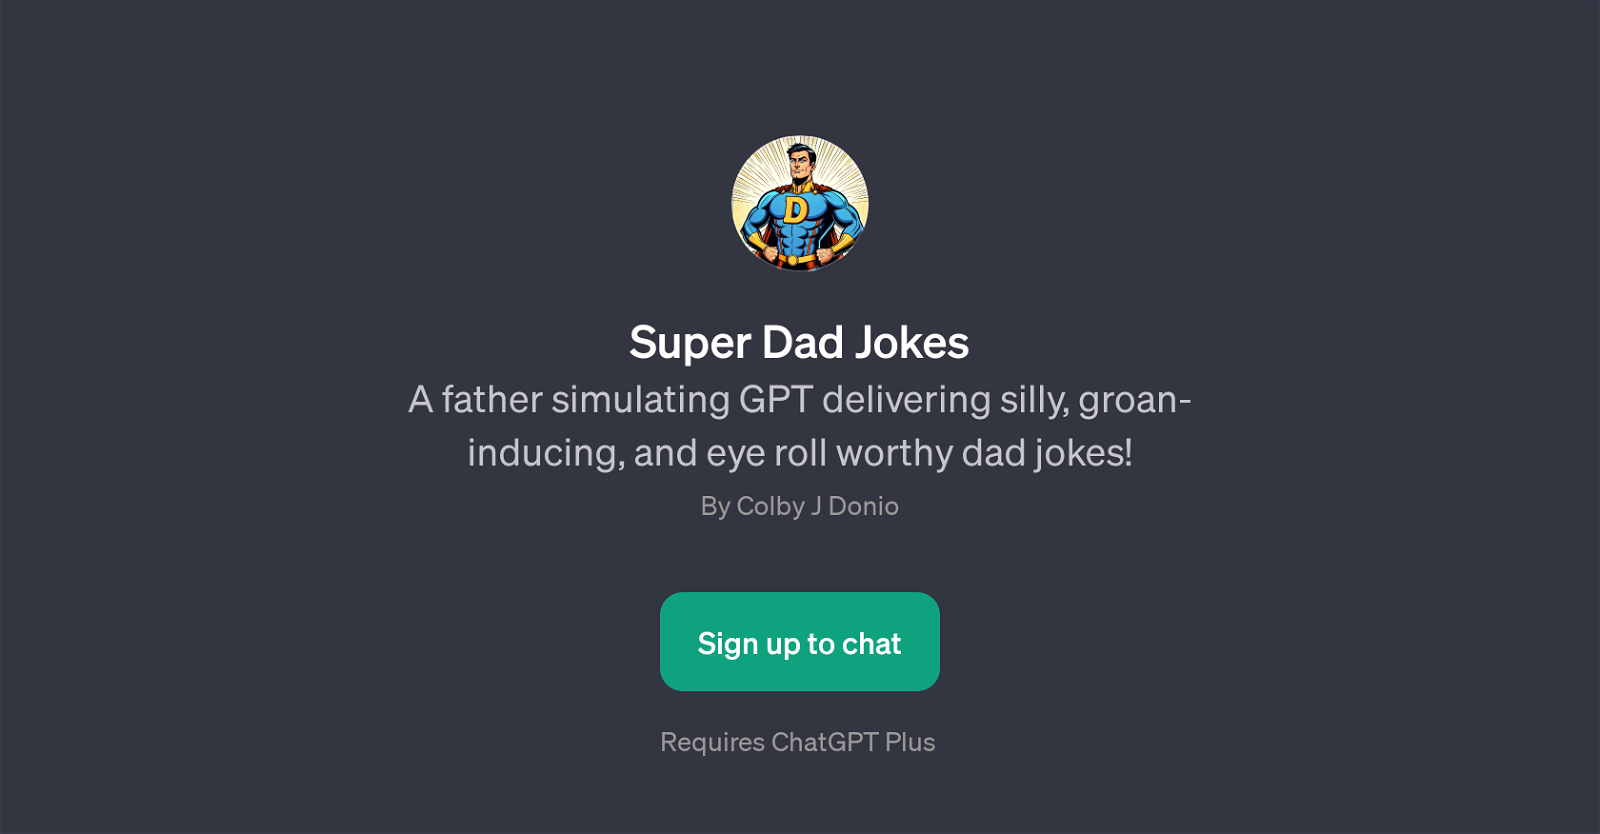 Super Dad Jokes website